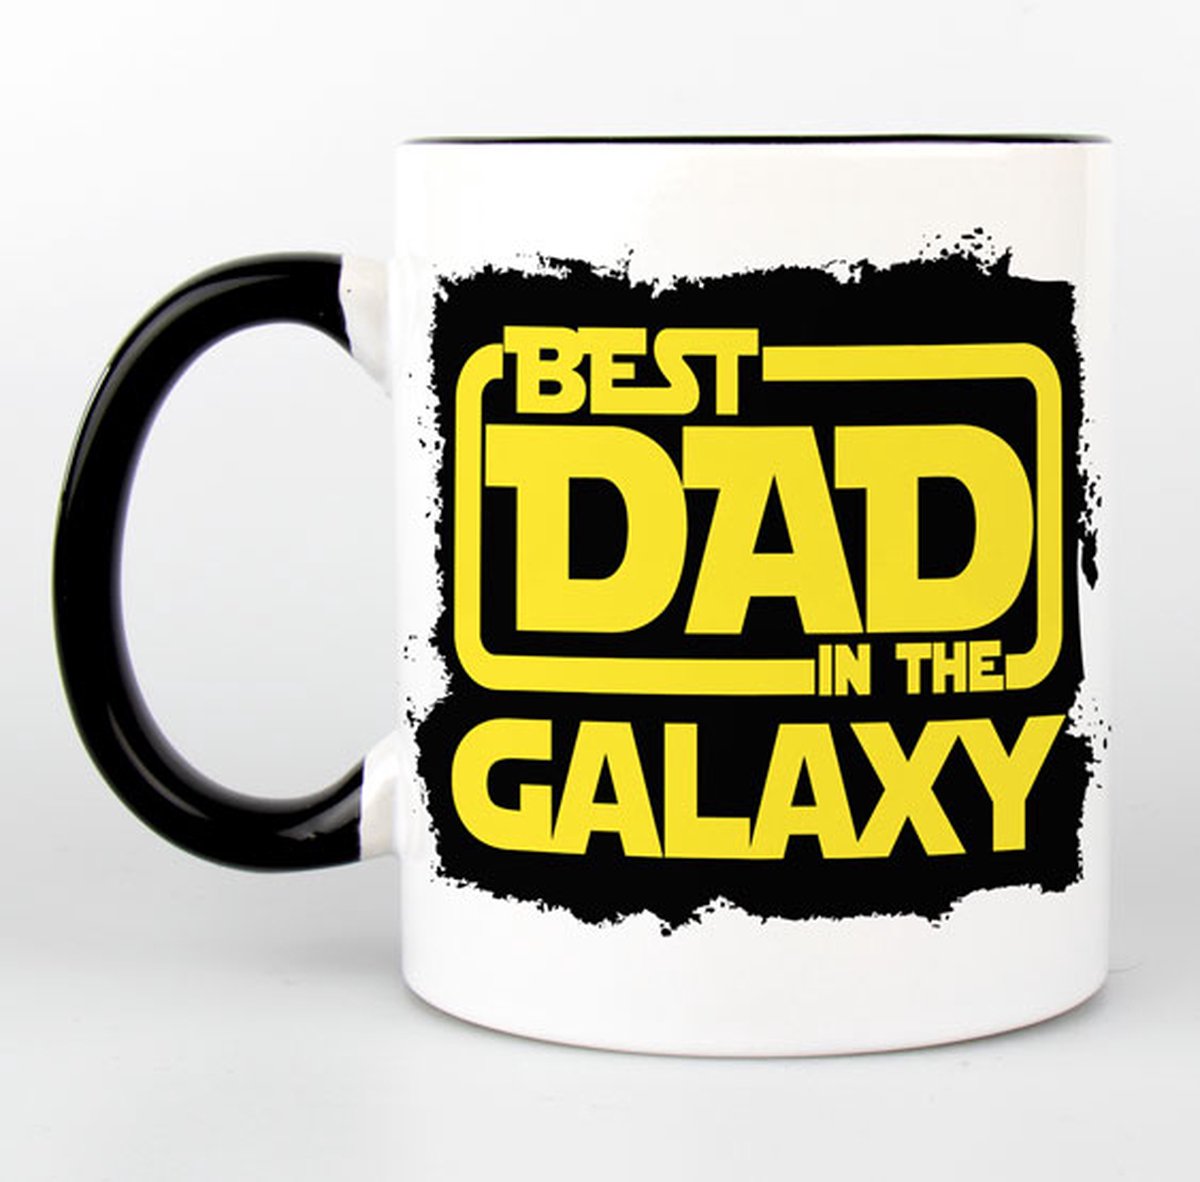 Best Dad in the Galaxy - Beker - Vaderdag mok - Vaderdag cadeau - Mok - Gratis inpak service